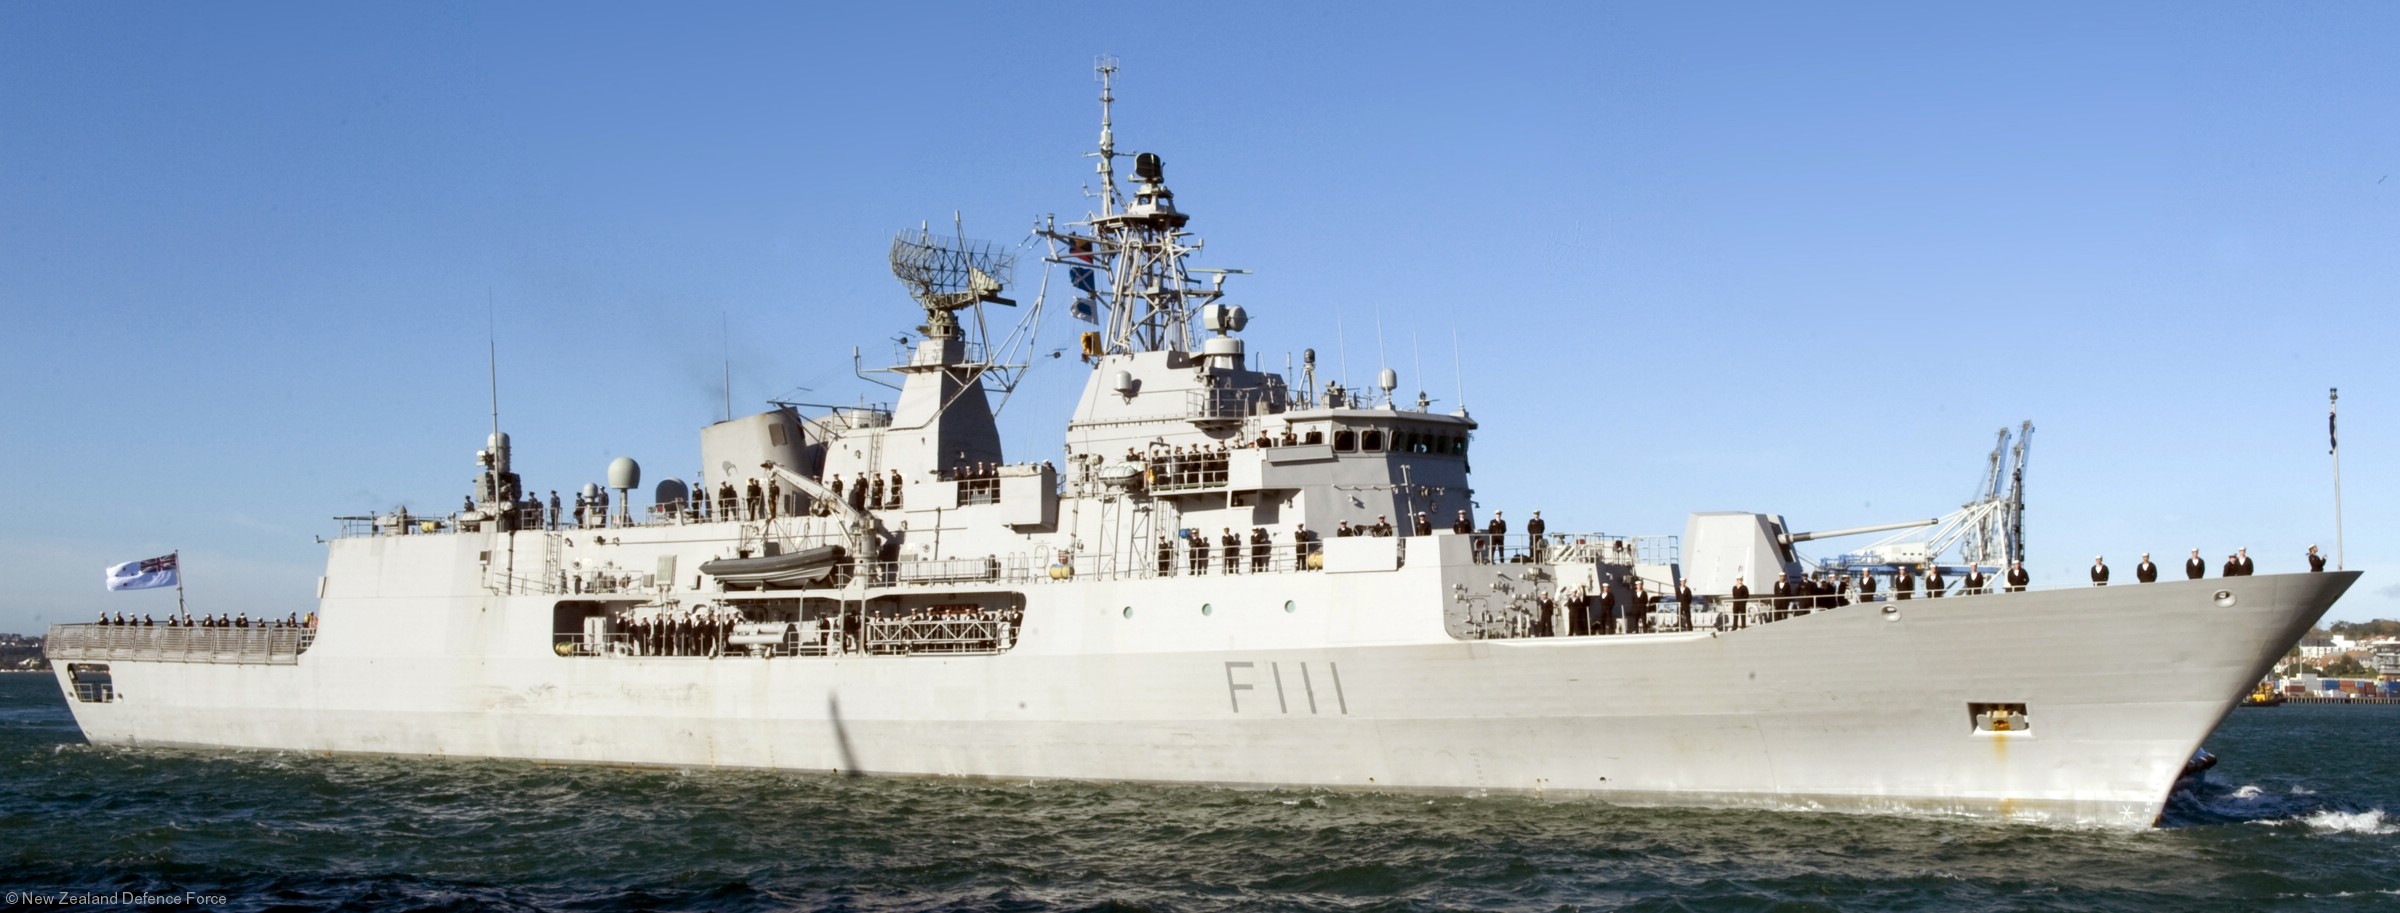 f-111 hmnzs te mana anzac class frigate royal new zealand navy rnzn 04